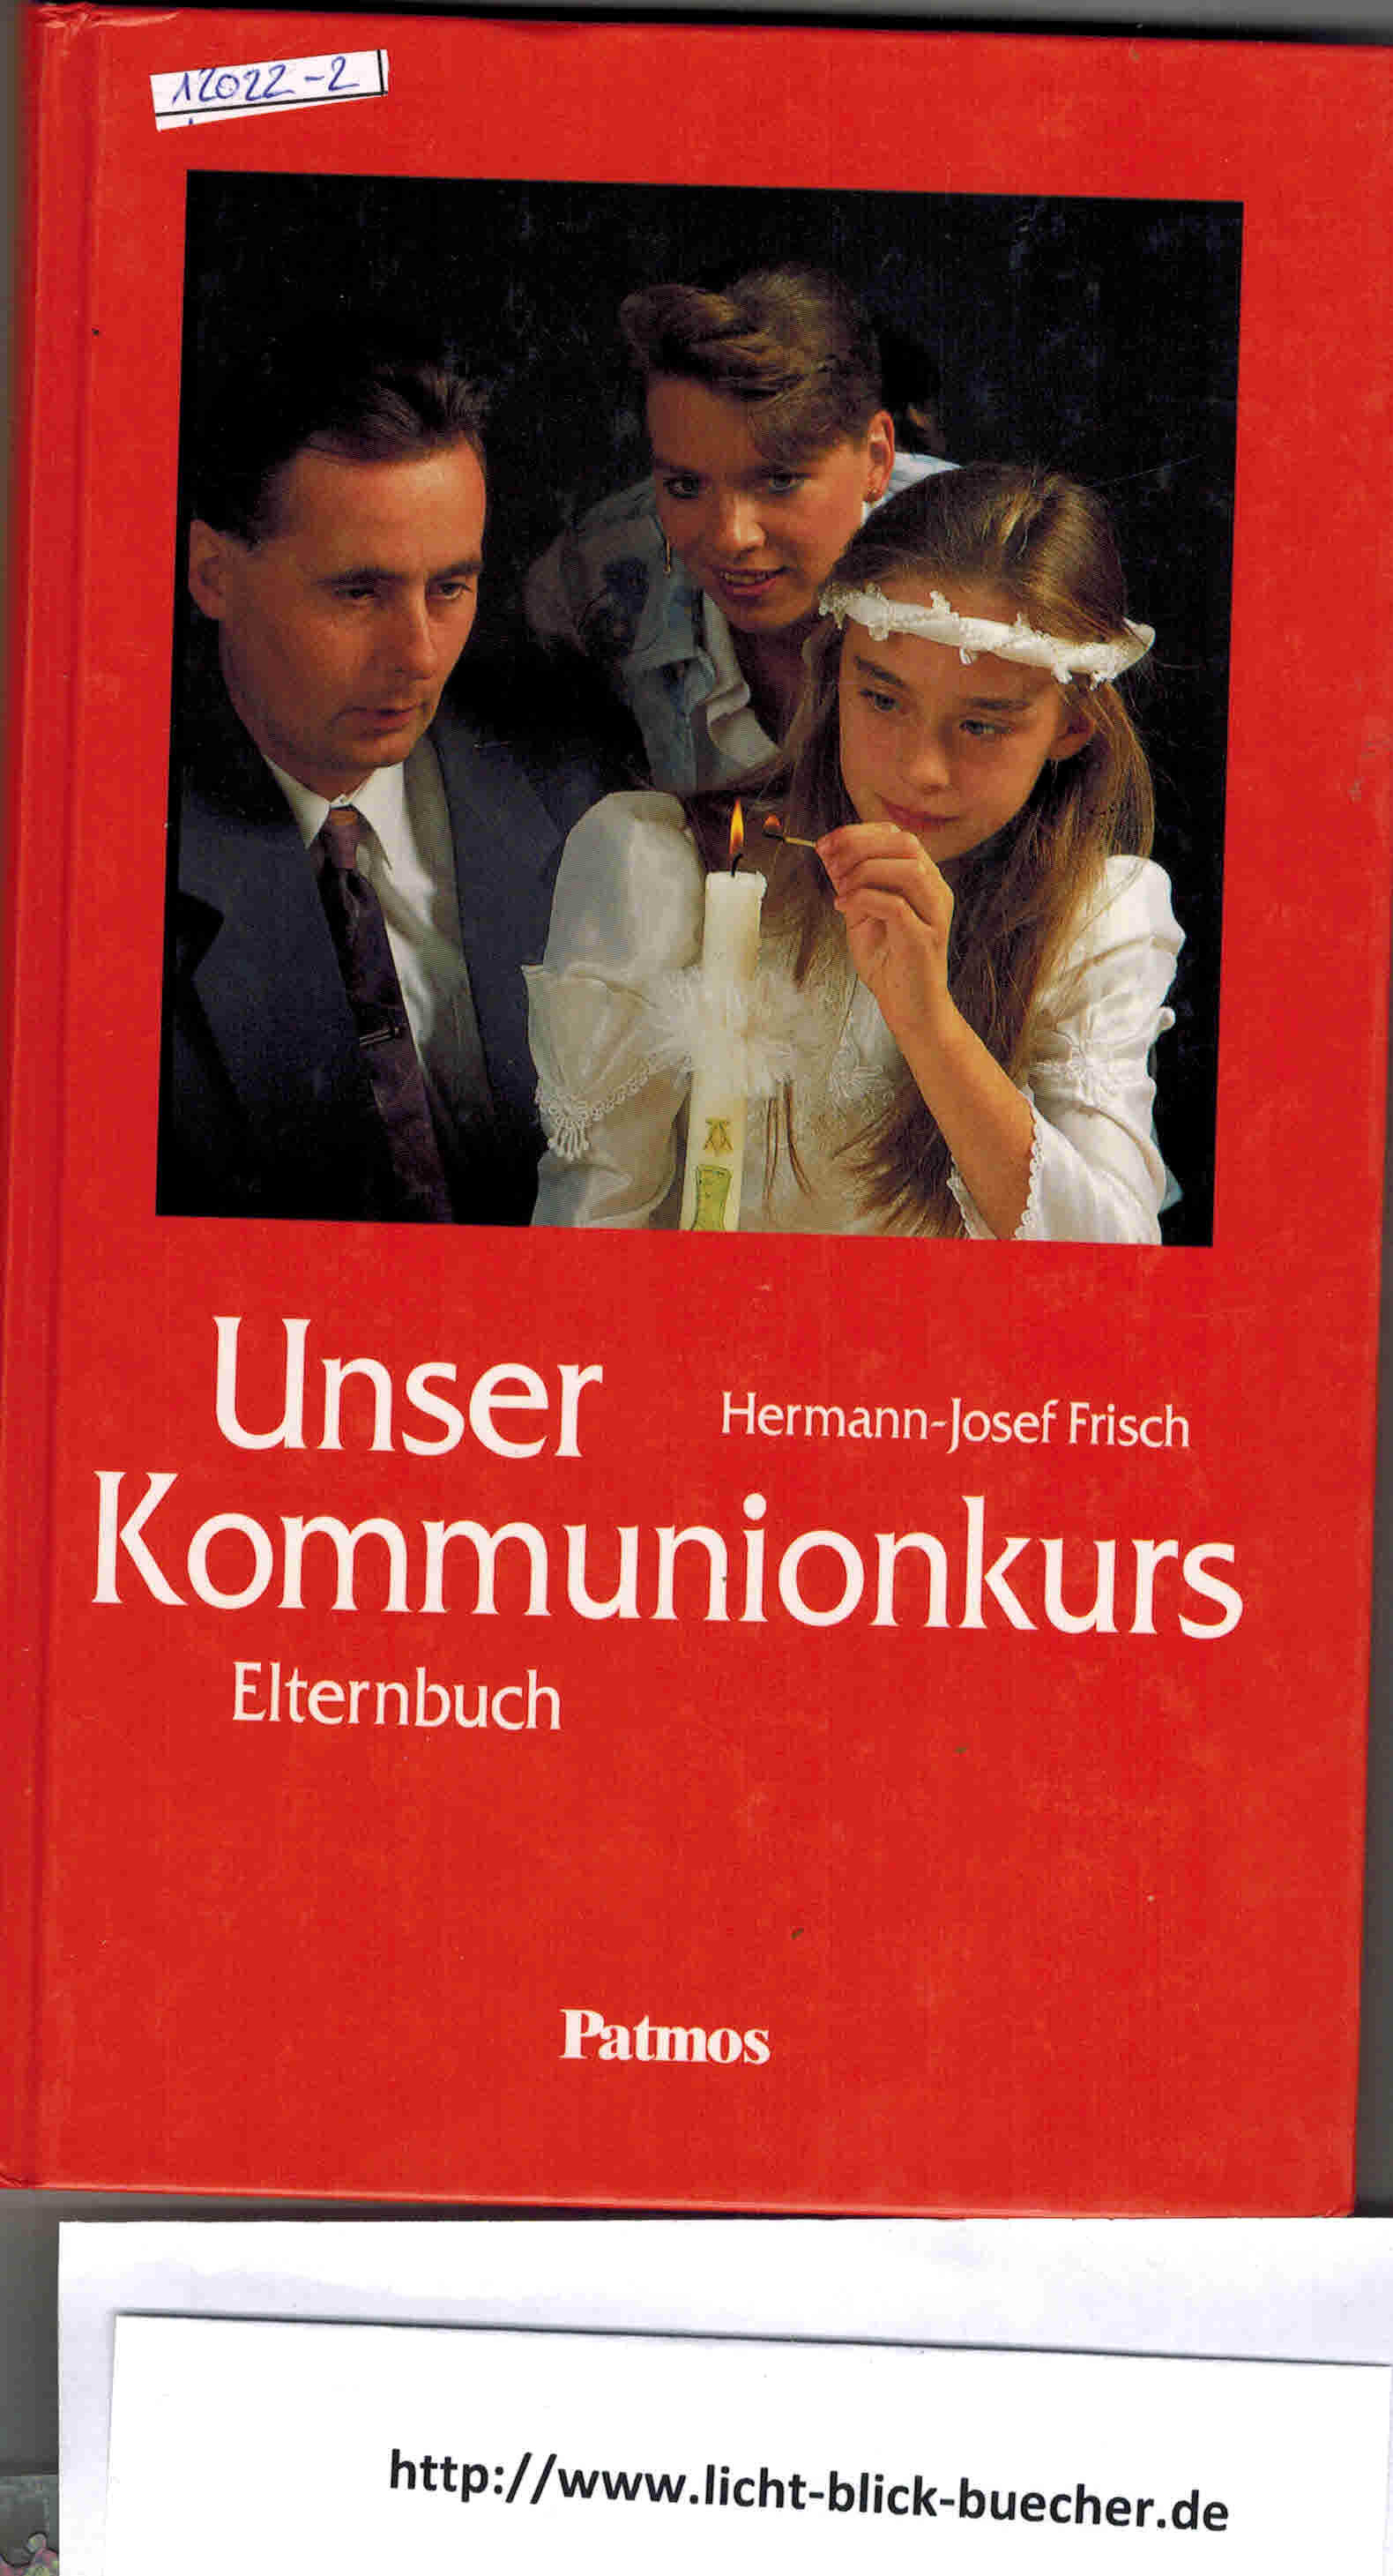 Unser Kommunionkurs  ElternbuchHermann-Josef Frisch